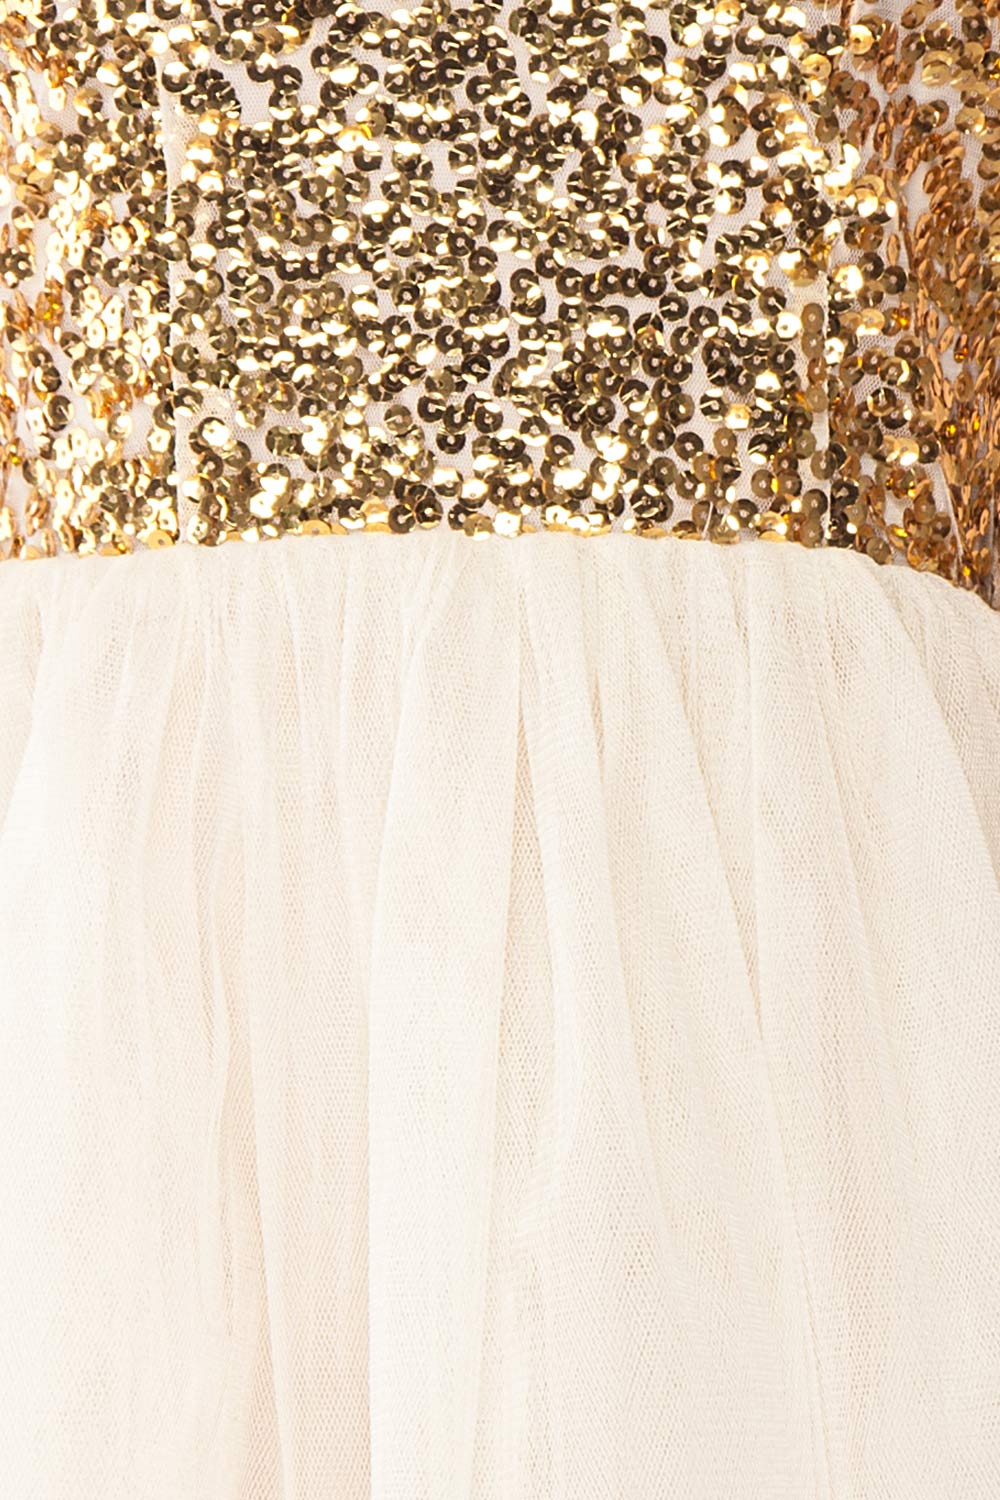 Sydalie Or Gold Sequin & Tulle A-Line Party Dress detail close up | Boutique 1861